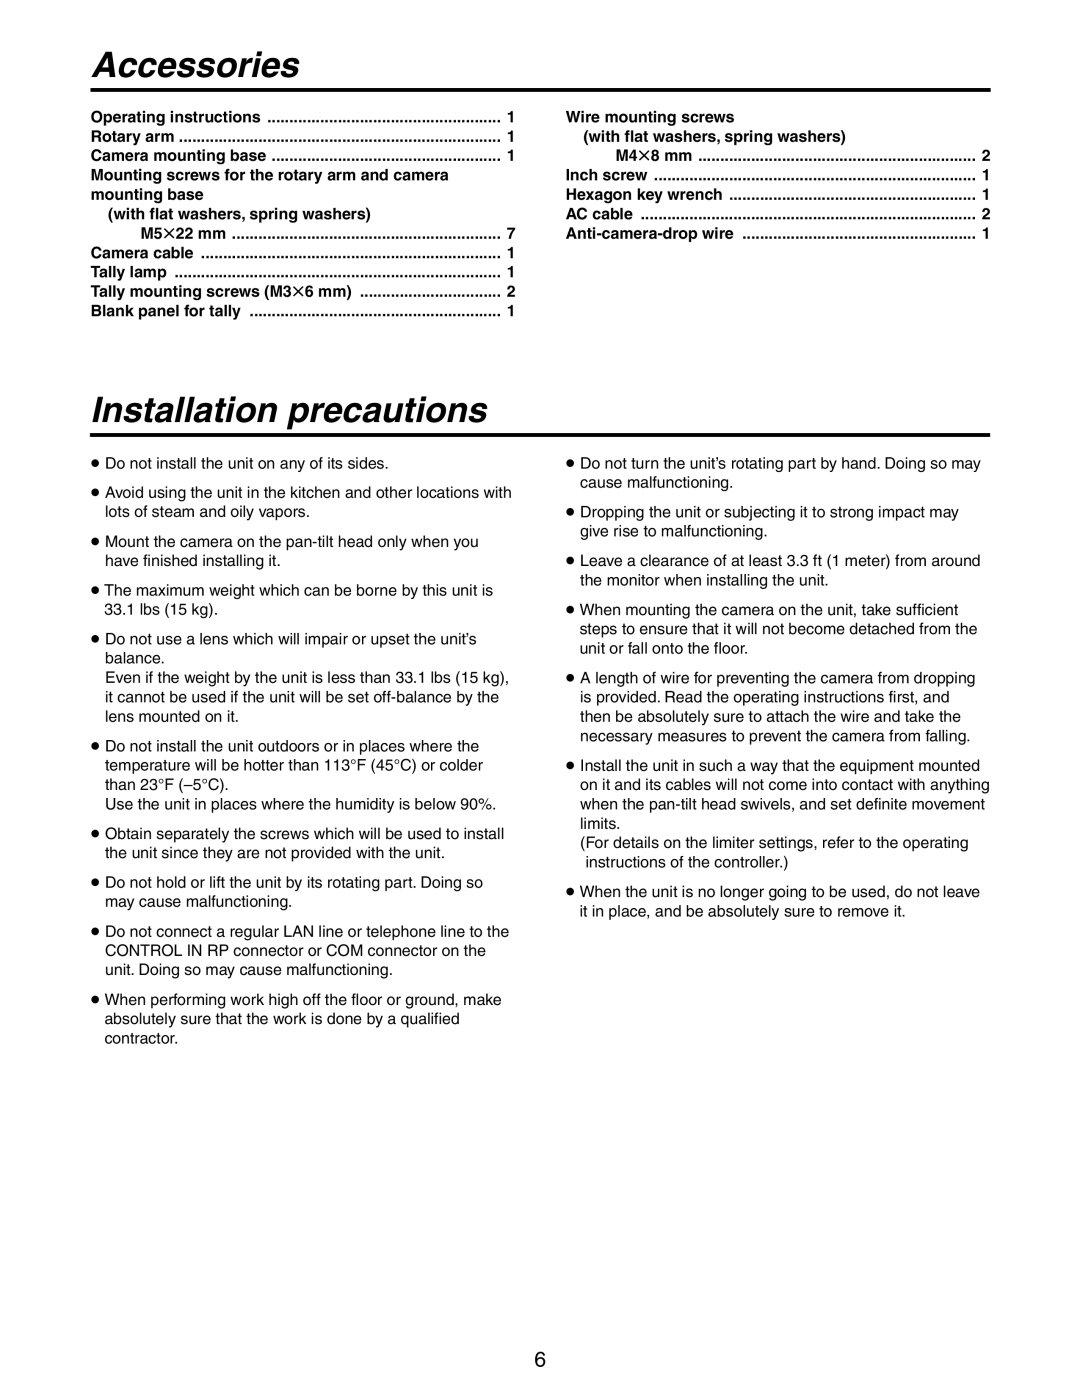 Panasonic AW-PH405N manual Accessories, Installation precautions 